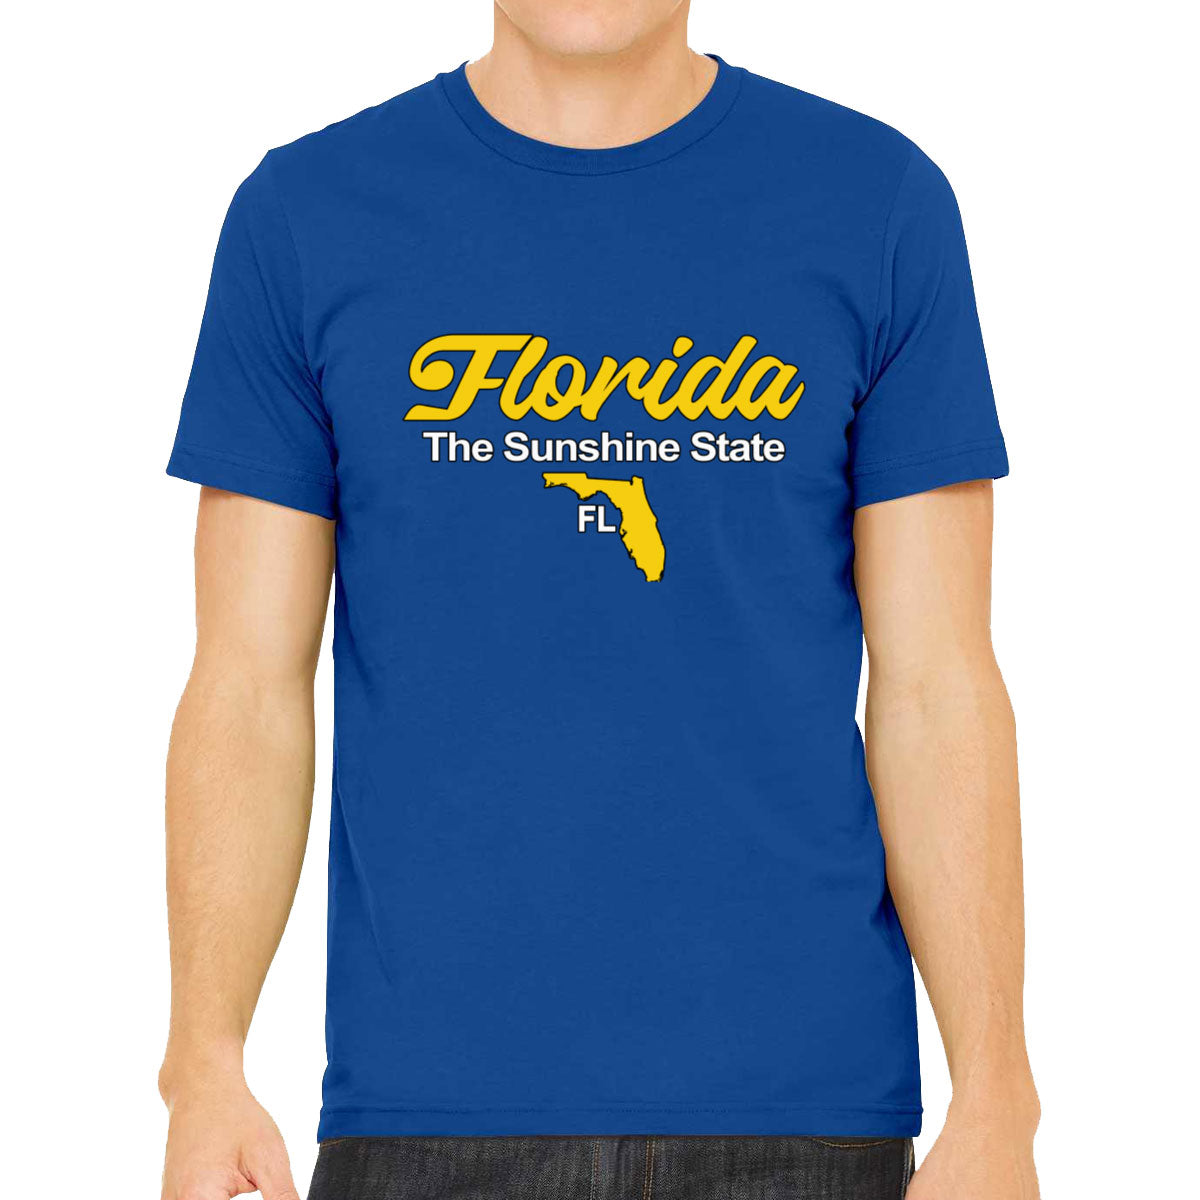 Florida The Sunshine State Men's T-shirt